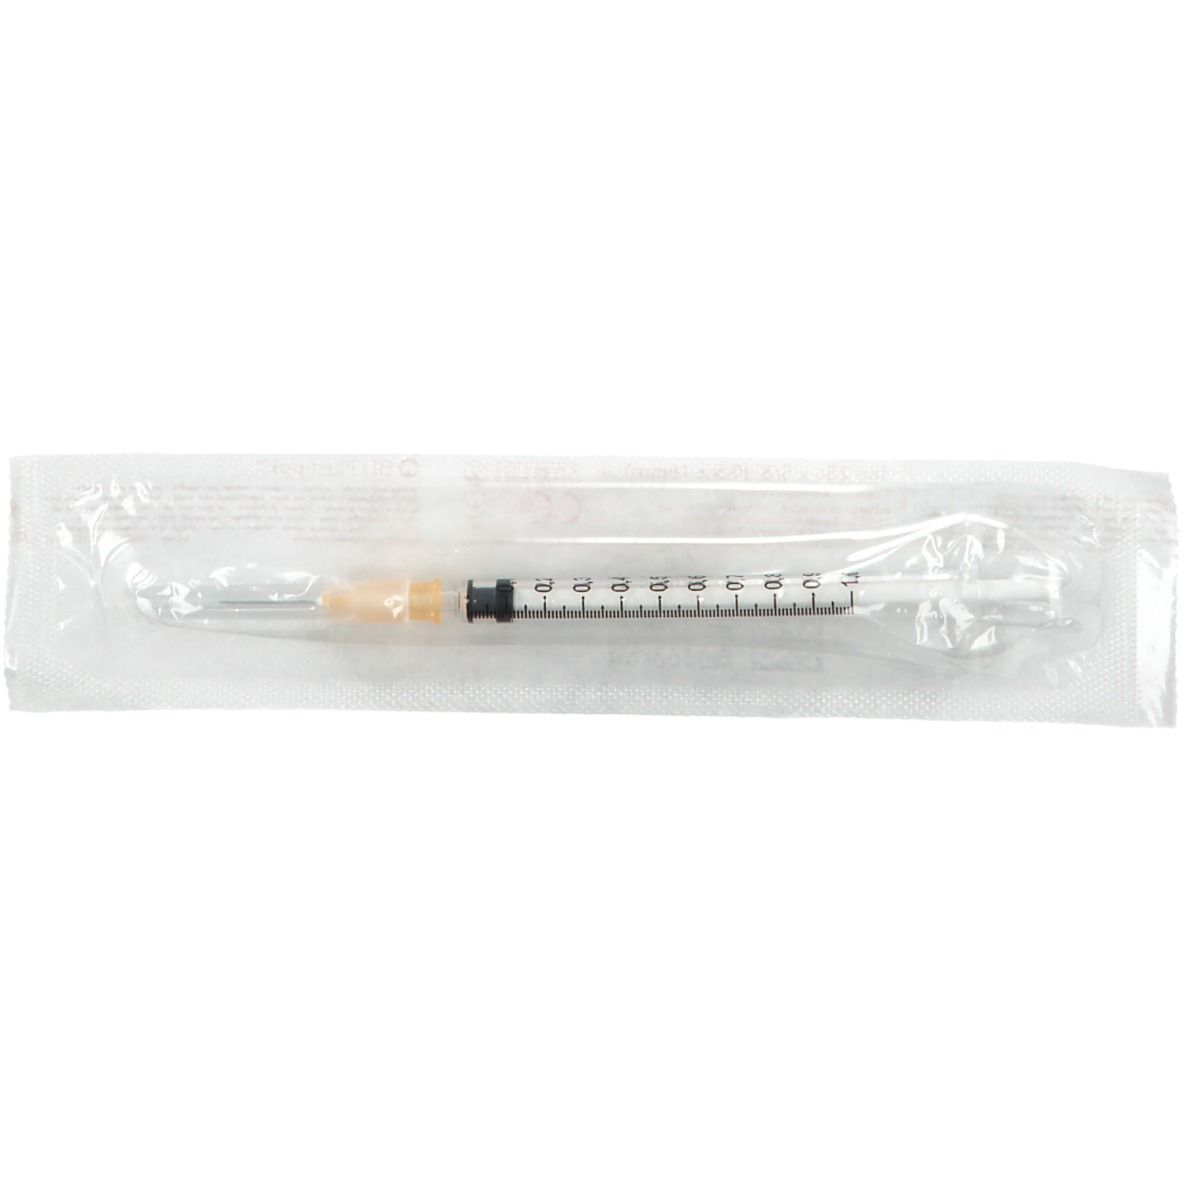 BD Plastipak™ Seringue Tuberculine avec Aiguille 1 ml 25g5/8